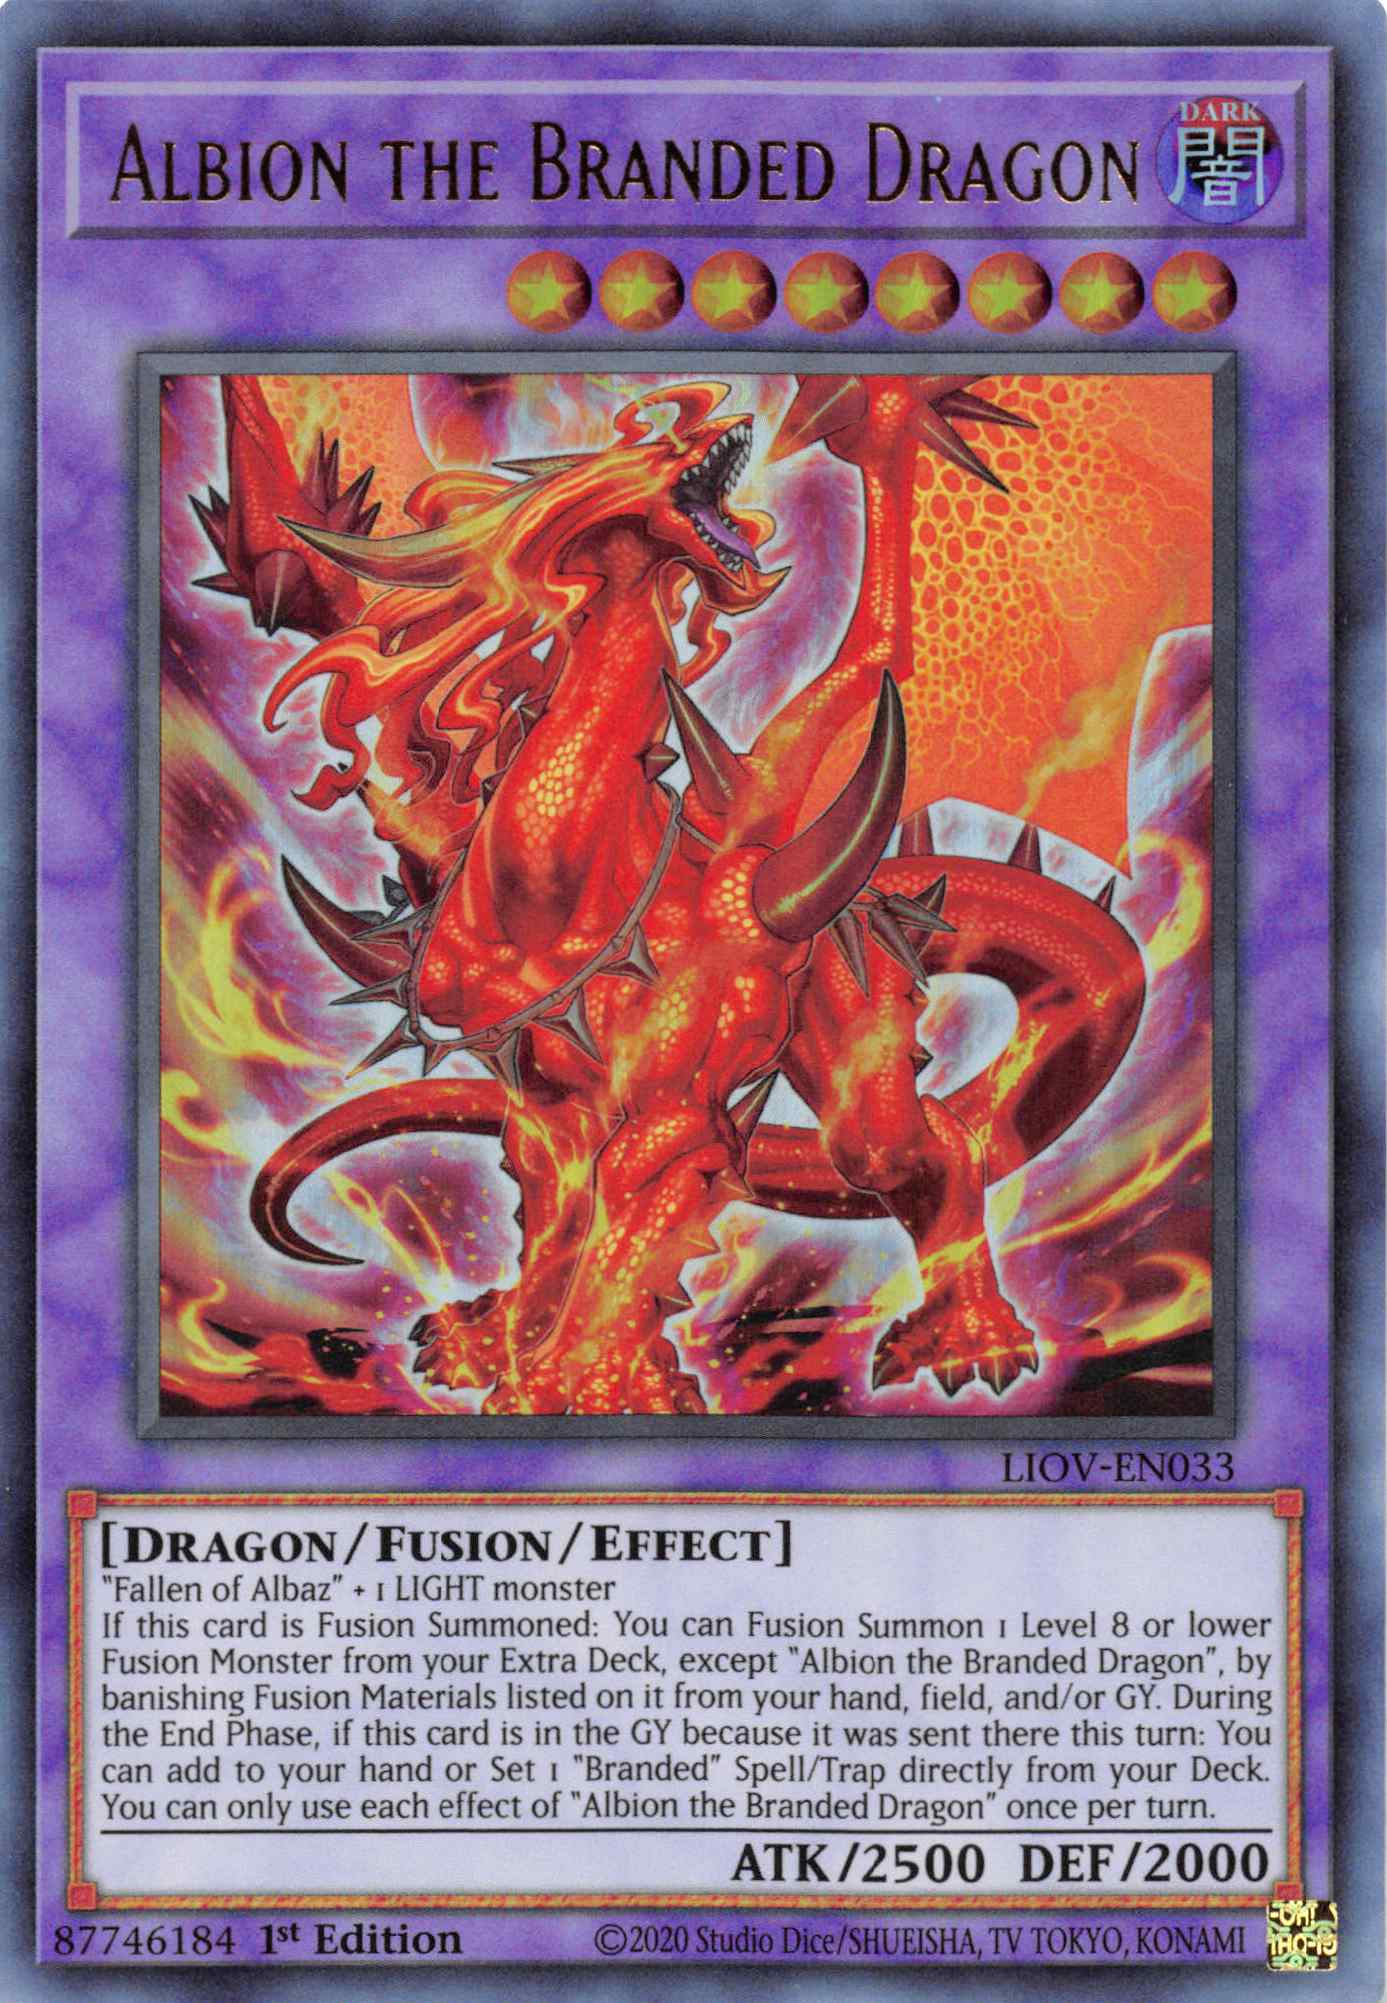 Albion the Branded Dragon [LIOV-EN033] Ultra Rare | Shuffle n Cut Hobbies & Games